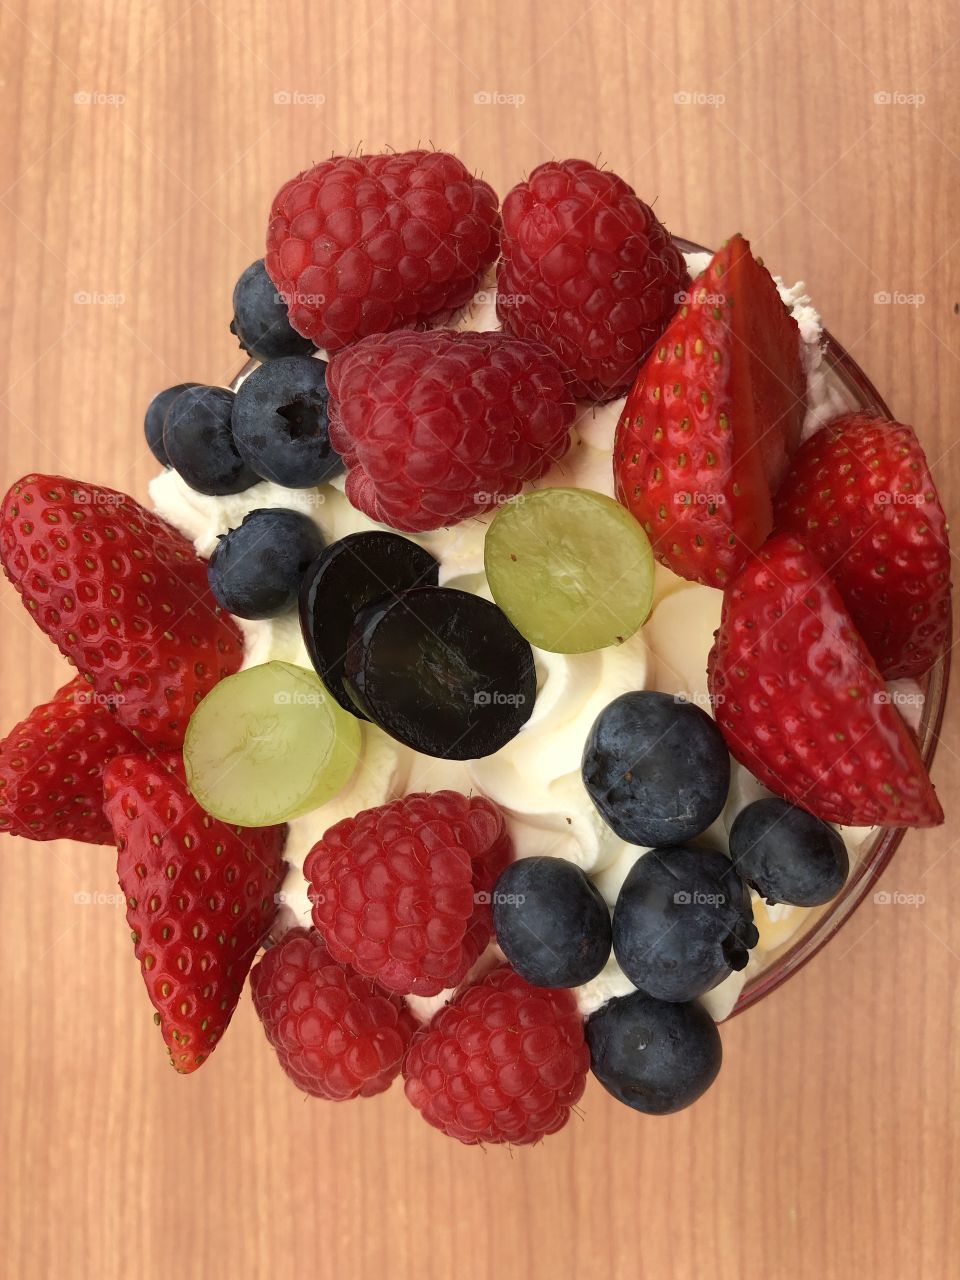 A beautiful trifle with an abundance of fresh fruits, top class food.